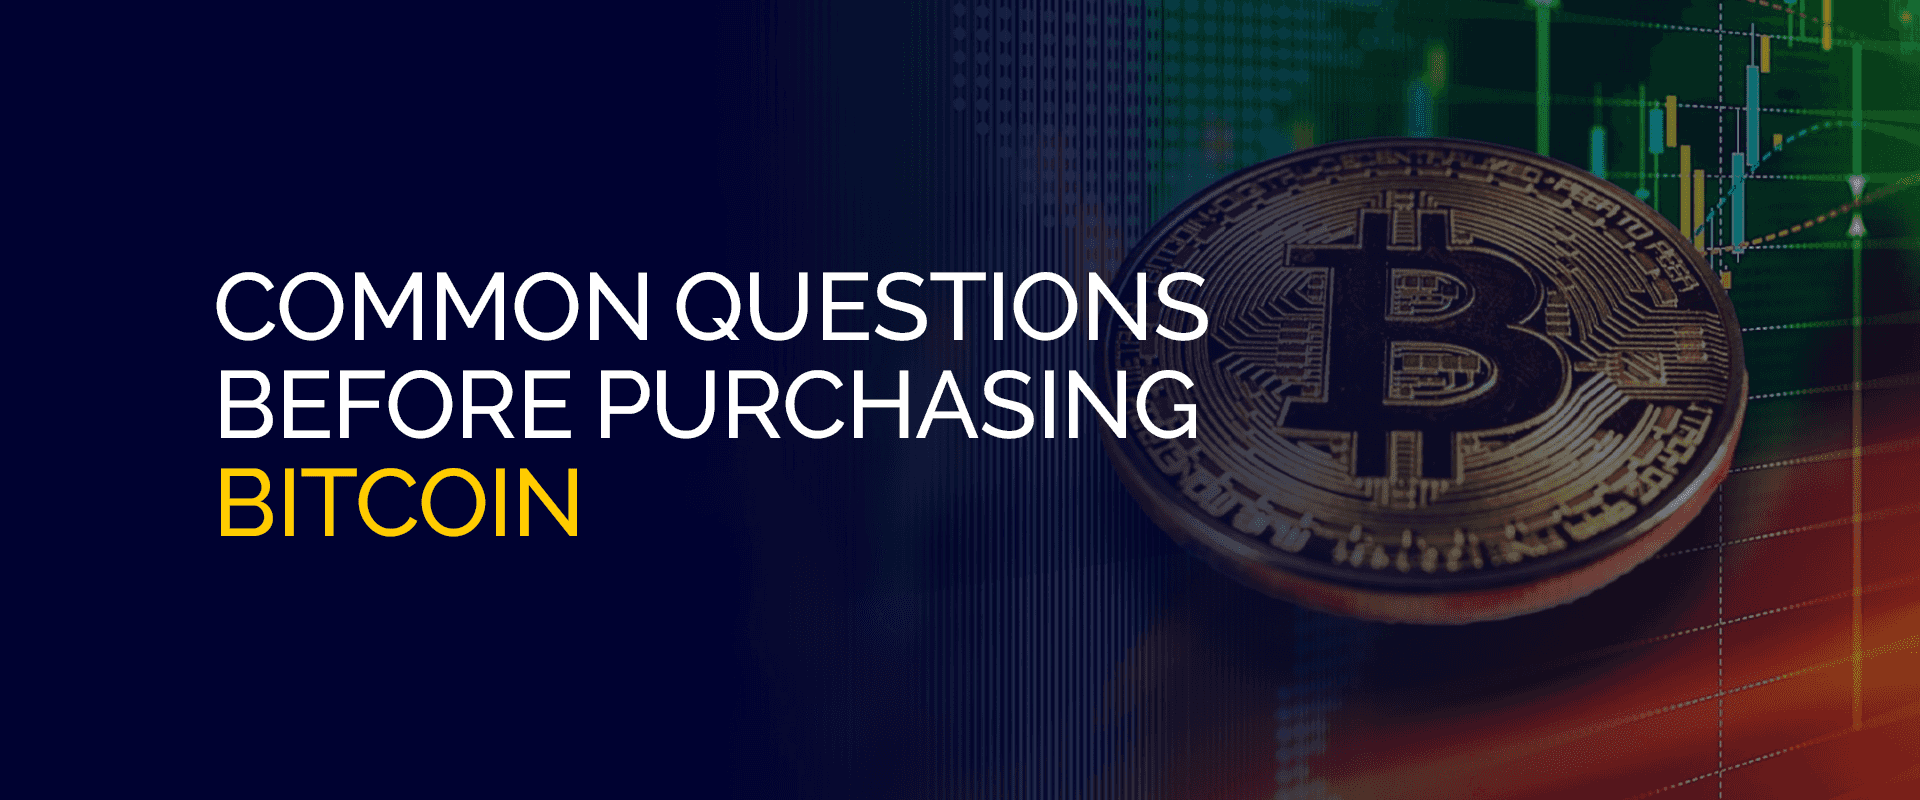 Questions courantes avant d'acheter du Bitcoin